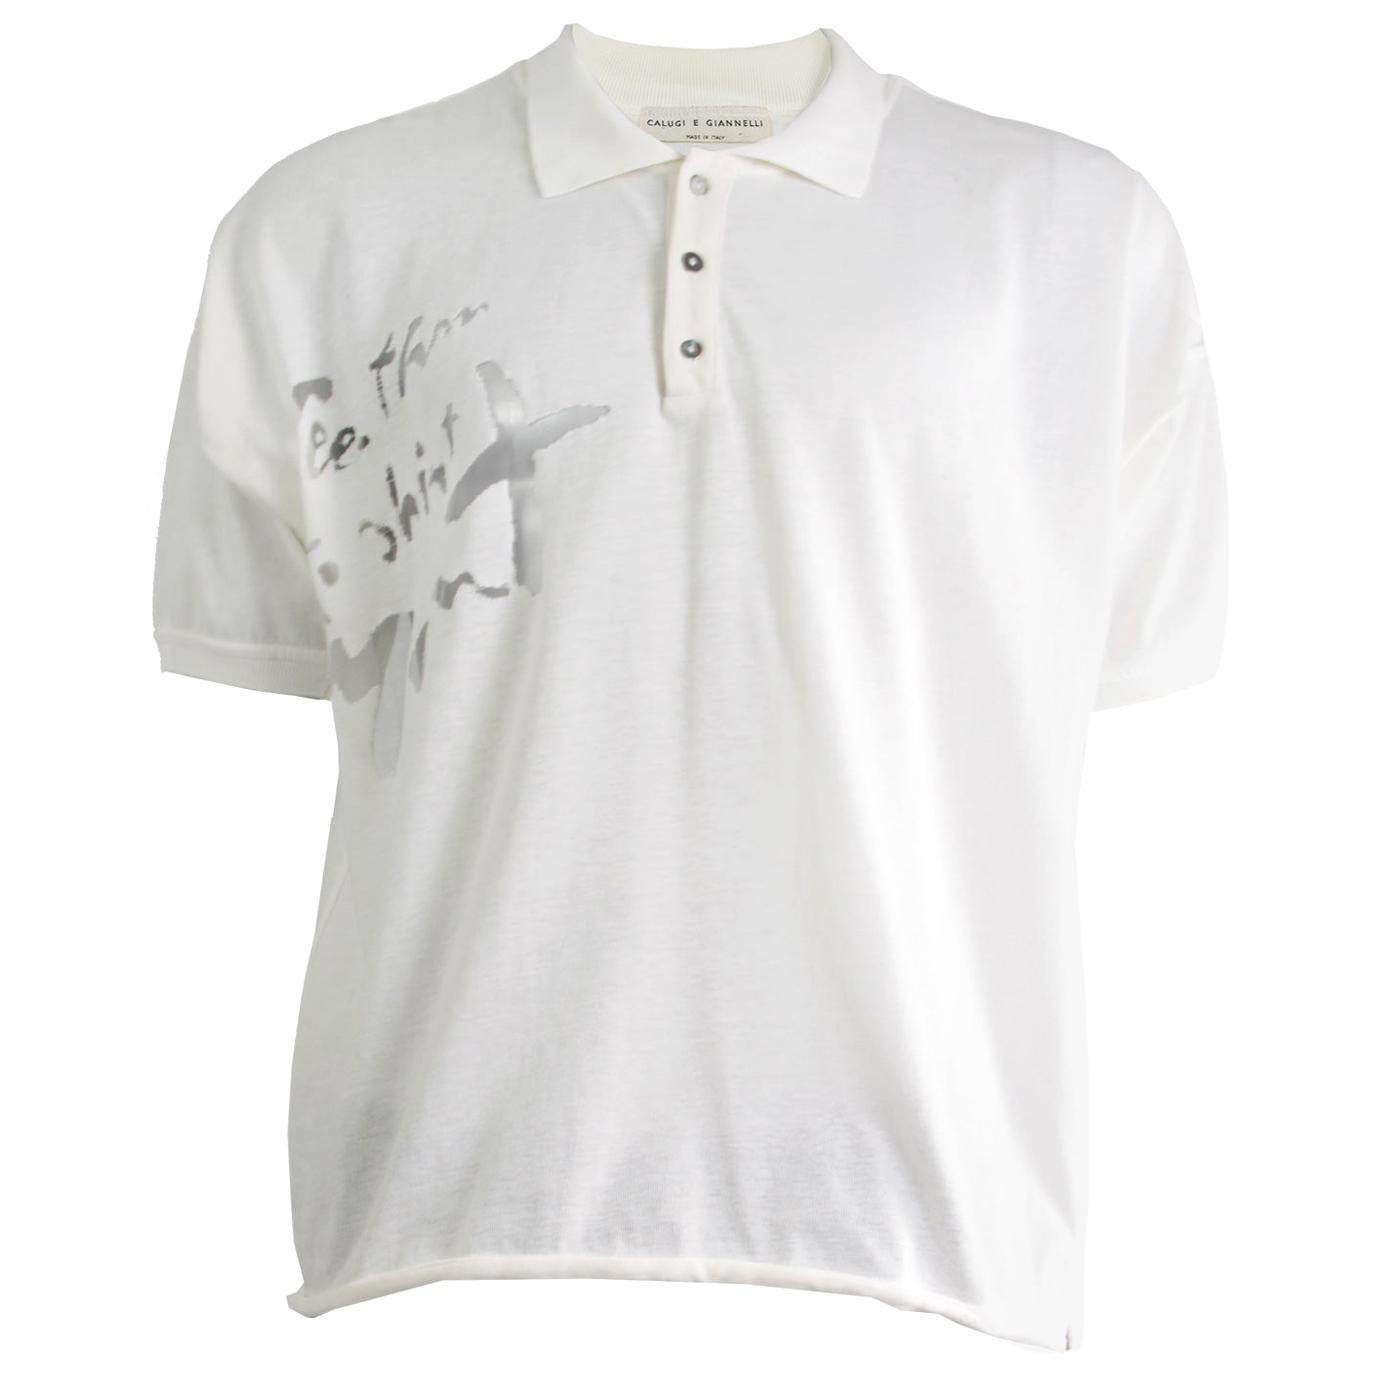 Calugi e Giannelli 'See Thru T-Shirt Man' Vintage Cotton Knit Polo Shirt, 1980s